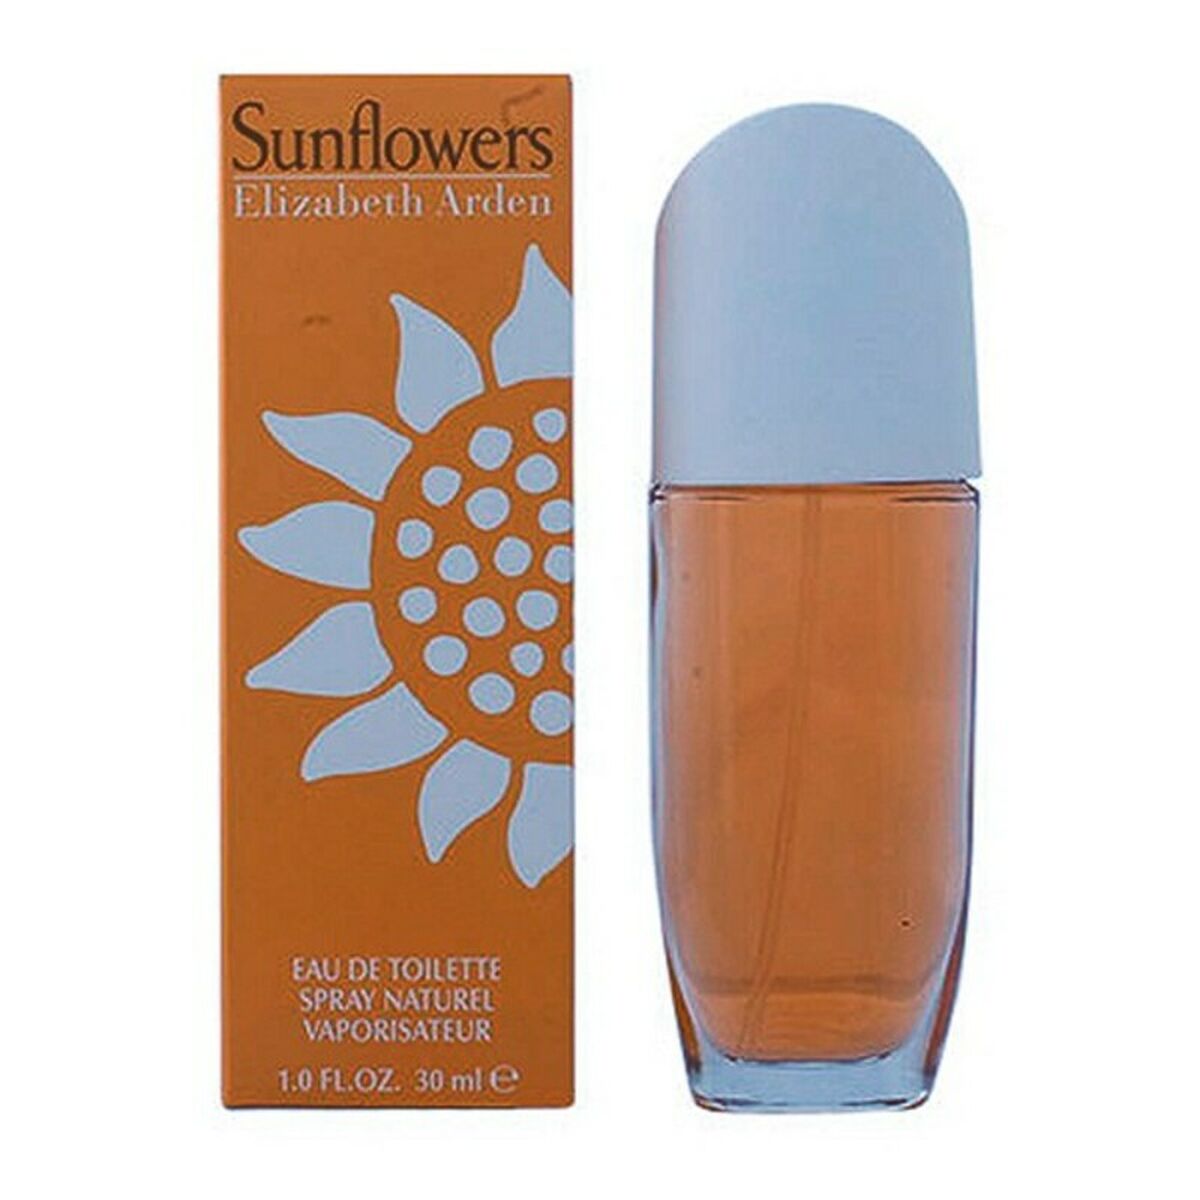 Women's Perfume Sunflowers Elizabeth Arden EDT